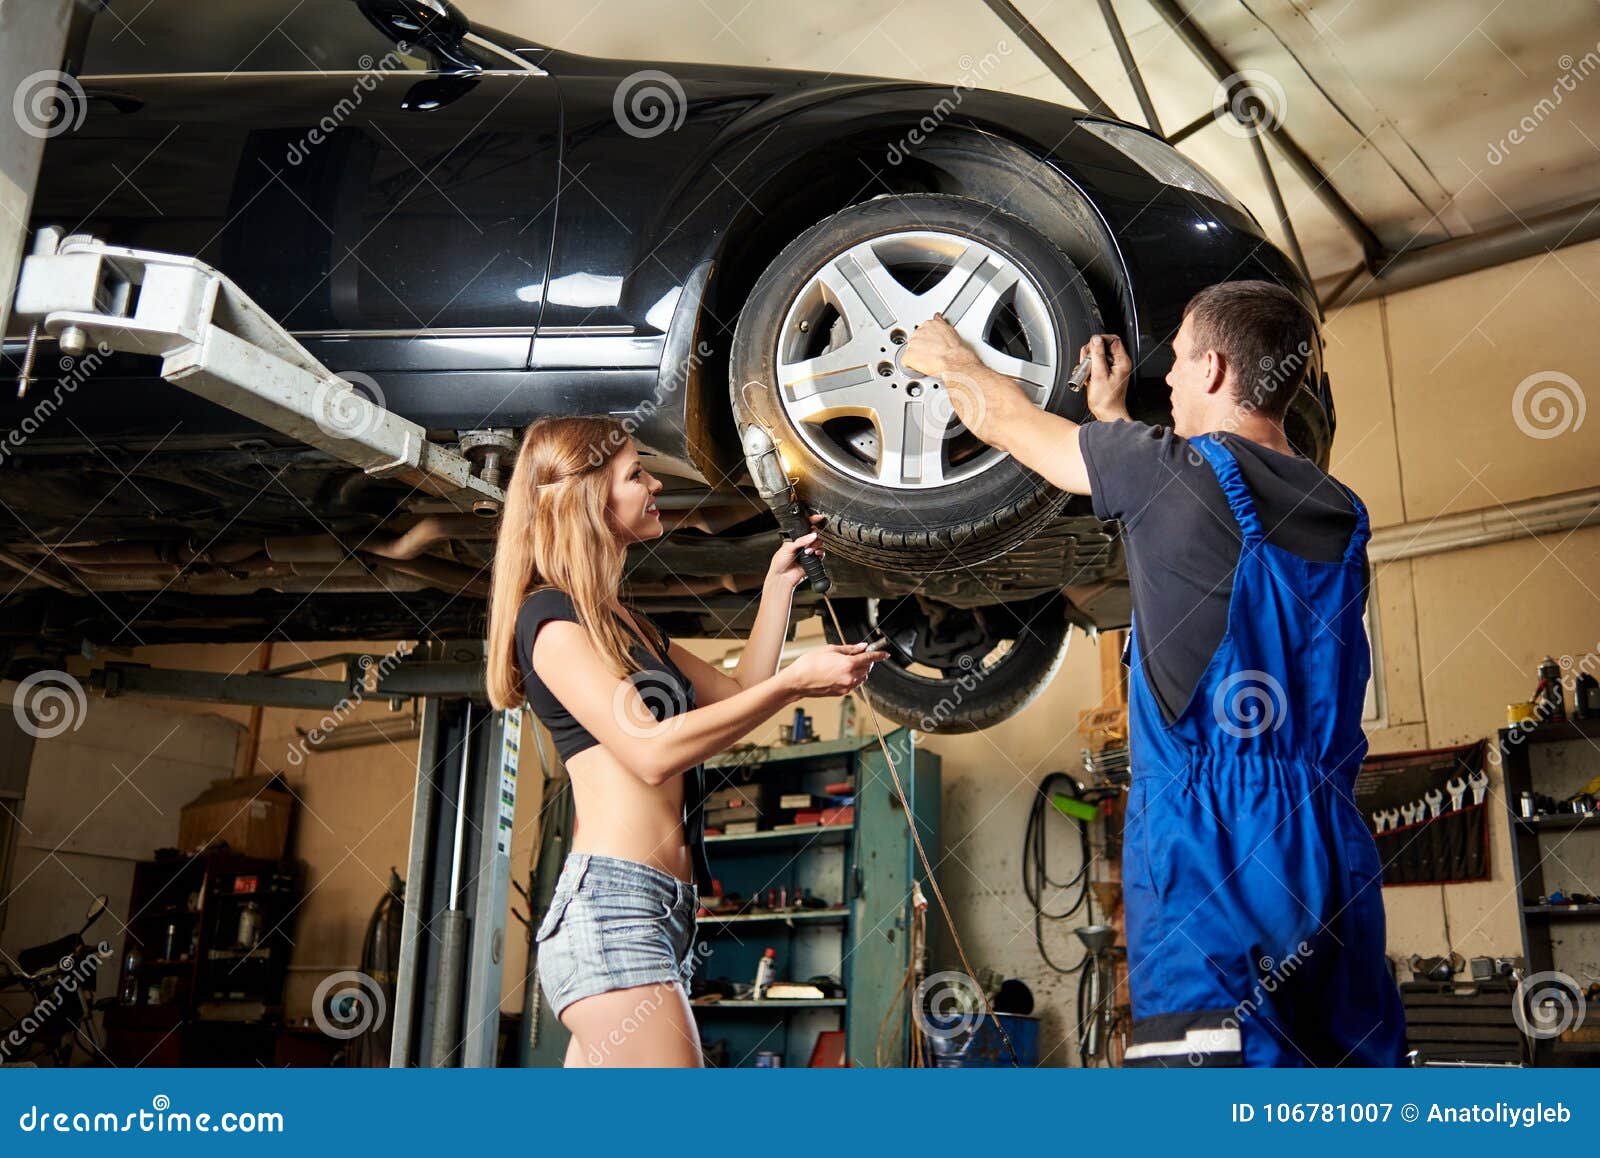 Sweety fox beauty auto mechanic. Девушка автослесарь. Механик чинит машину на подъемнике. Девушка ремонтирует автомобиль. Девушка чинит авто.